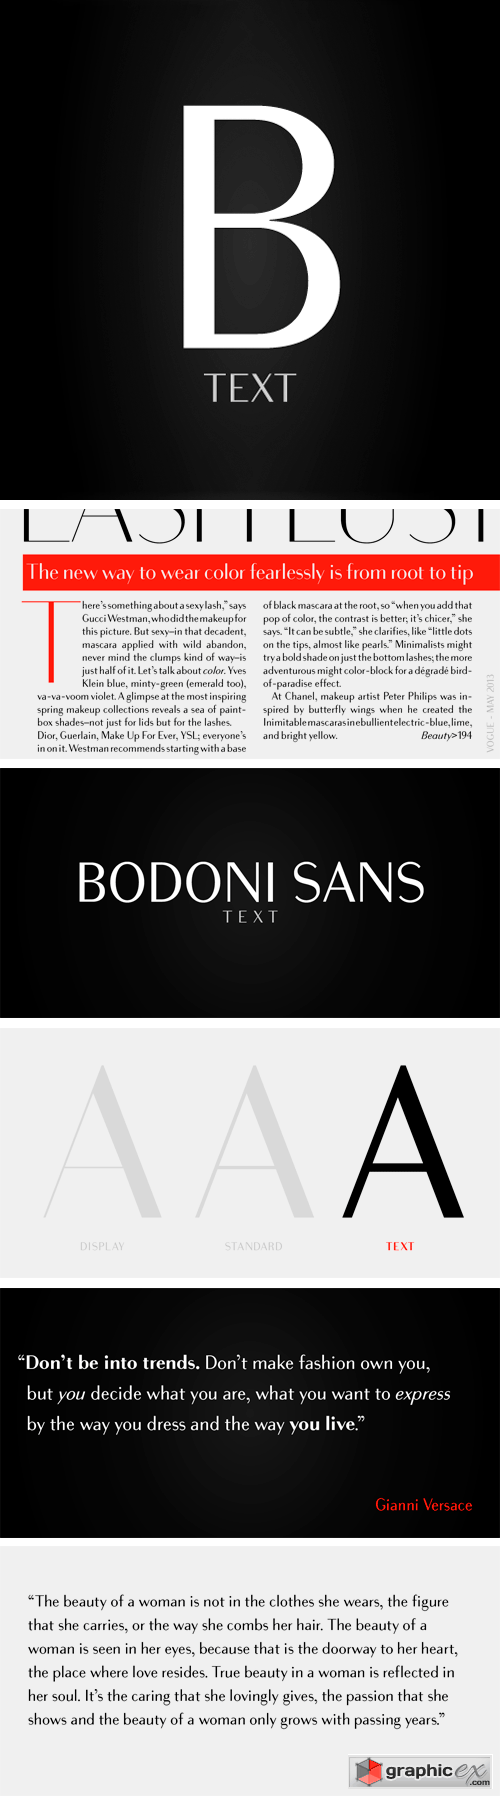 Bodoni Sans Text Font Family - 4 Fonts for $98